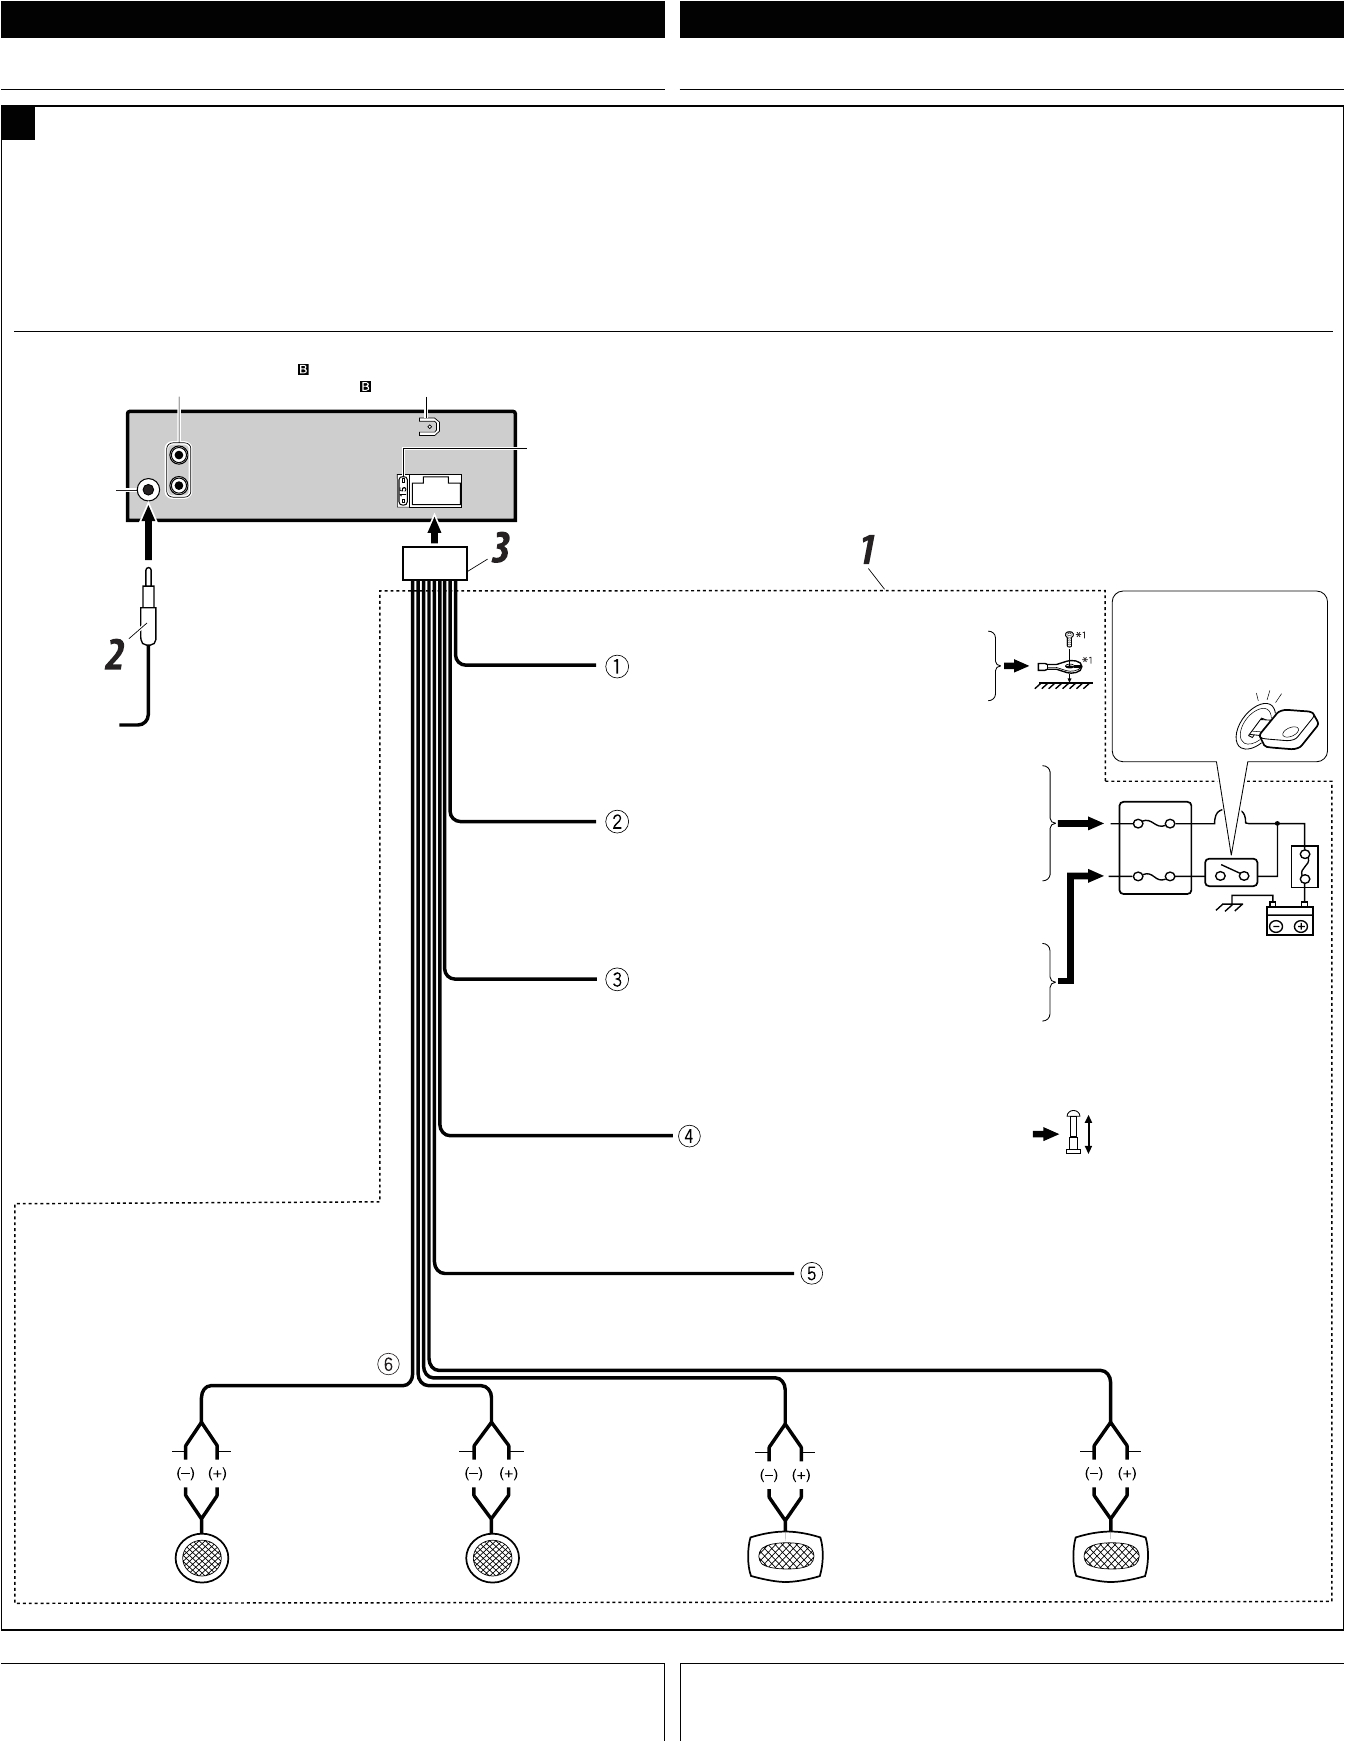 jvc kw xr810 wiring diagram awesome jvc kw wiring diagram trusted wiring diagram